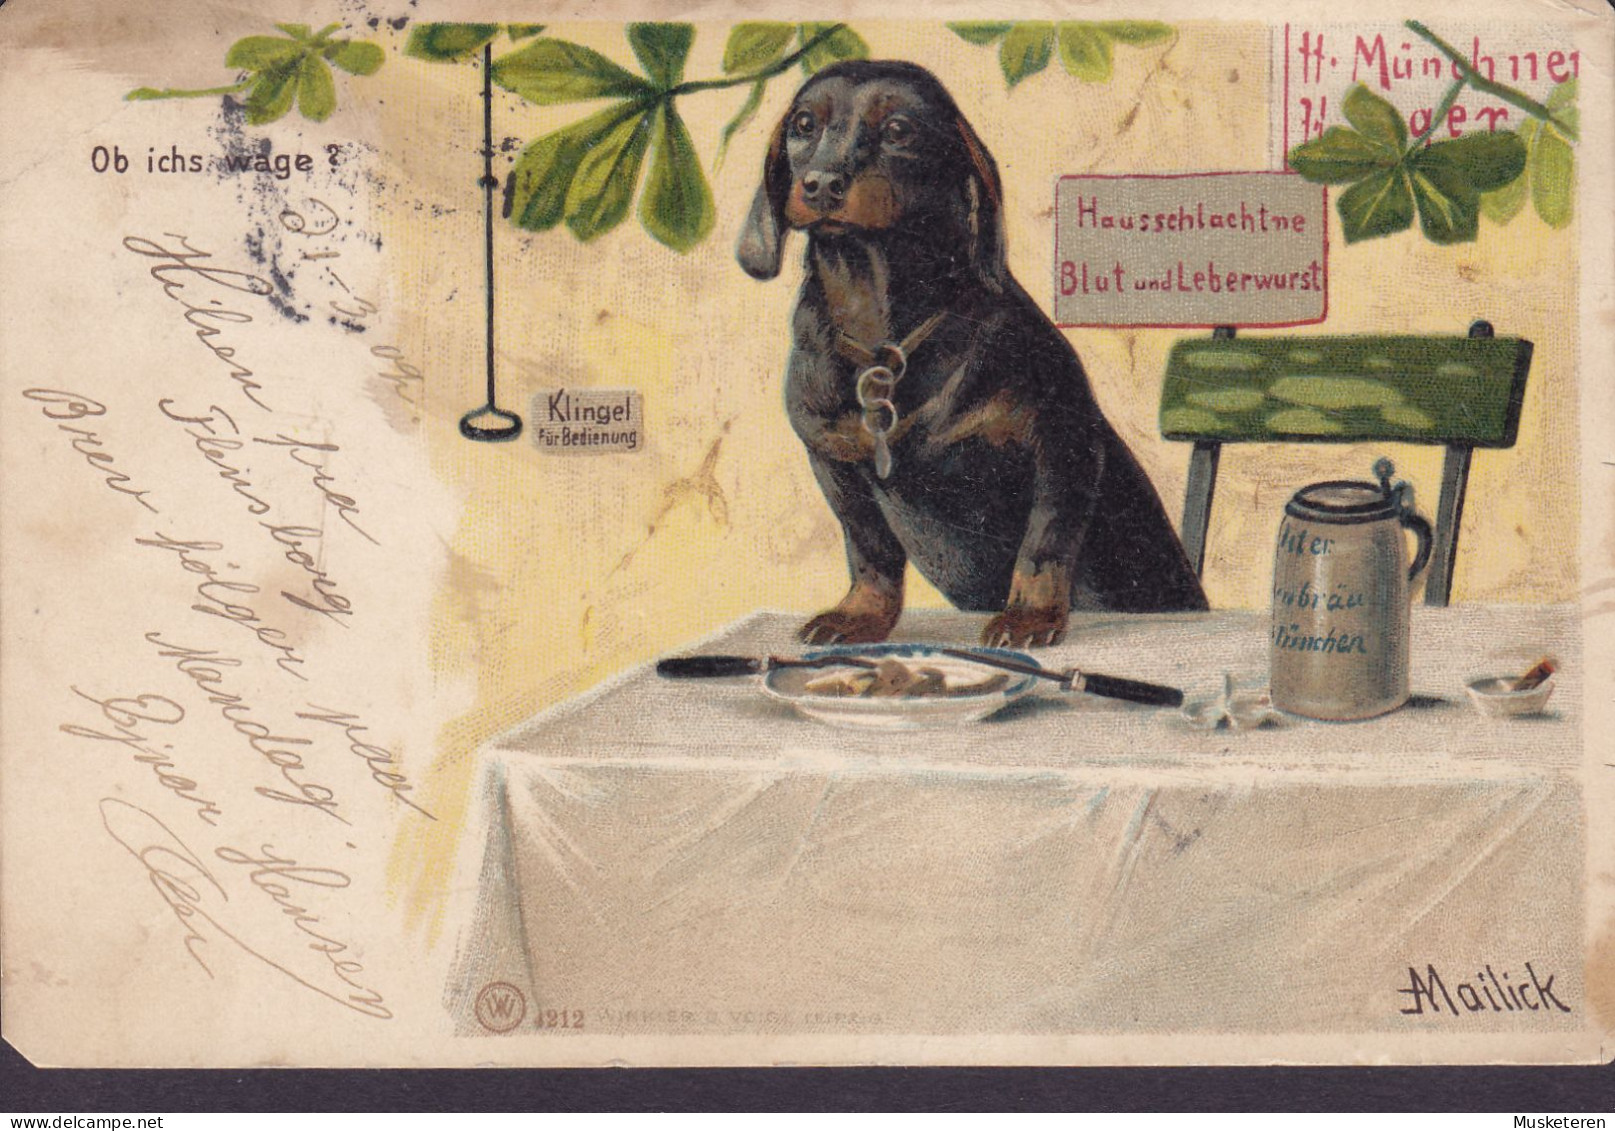 Reichspost UPU PPC Alfred Mailick 'Ob Ichs Wage?' Dog Hund Hond Chien Cane Perro Cão FLENSBURG 1902 VEILE (Arr.) Denmark - Dogs